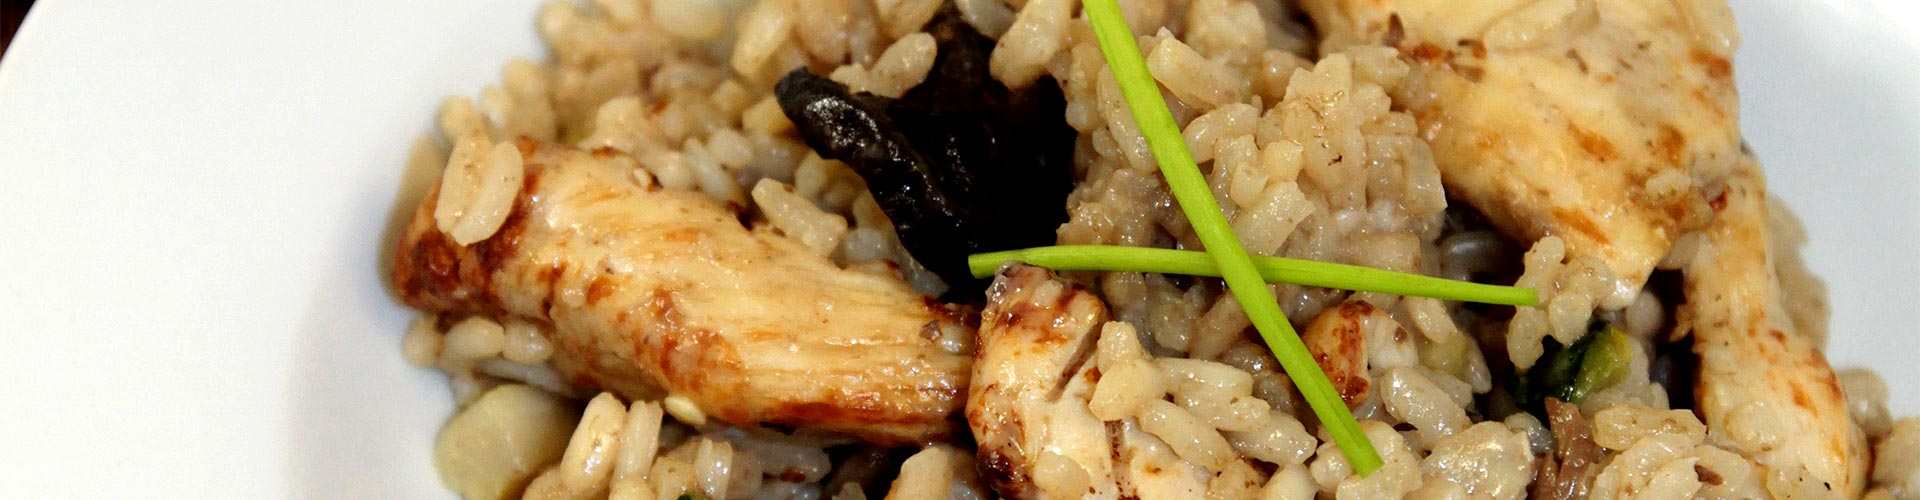 ¿Dónde comer risotto en Albacete?